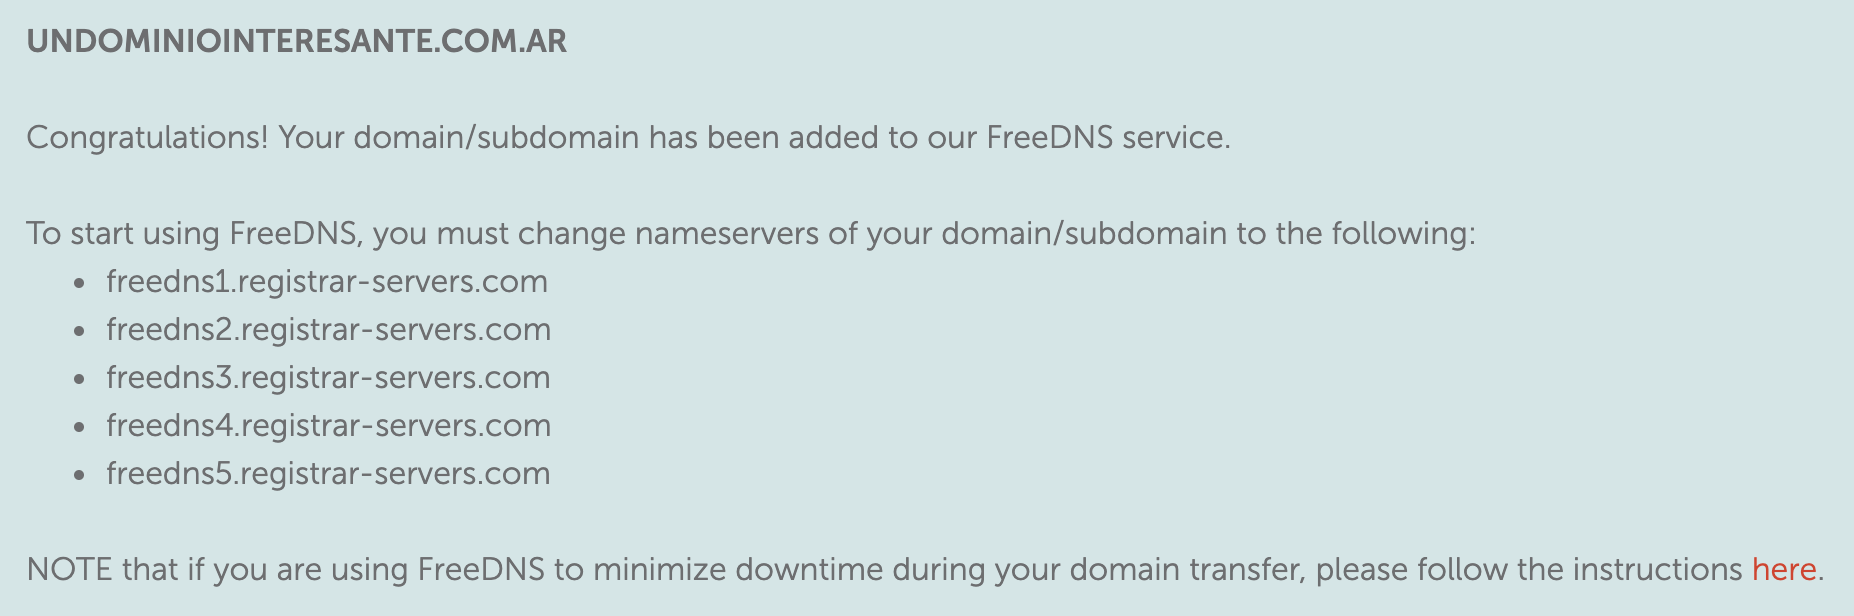 FreeDNS servers